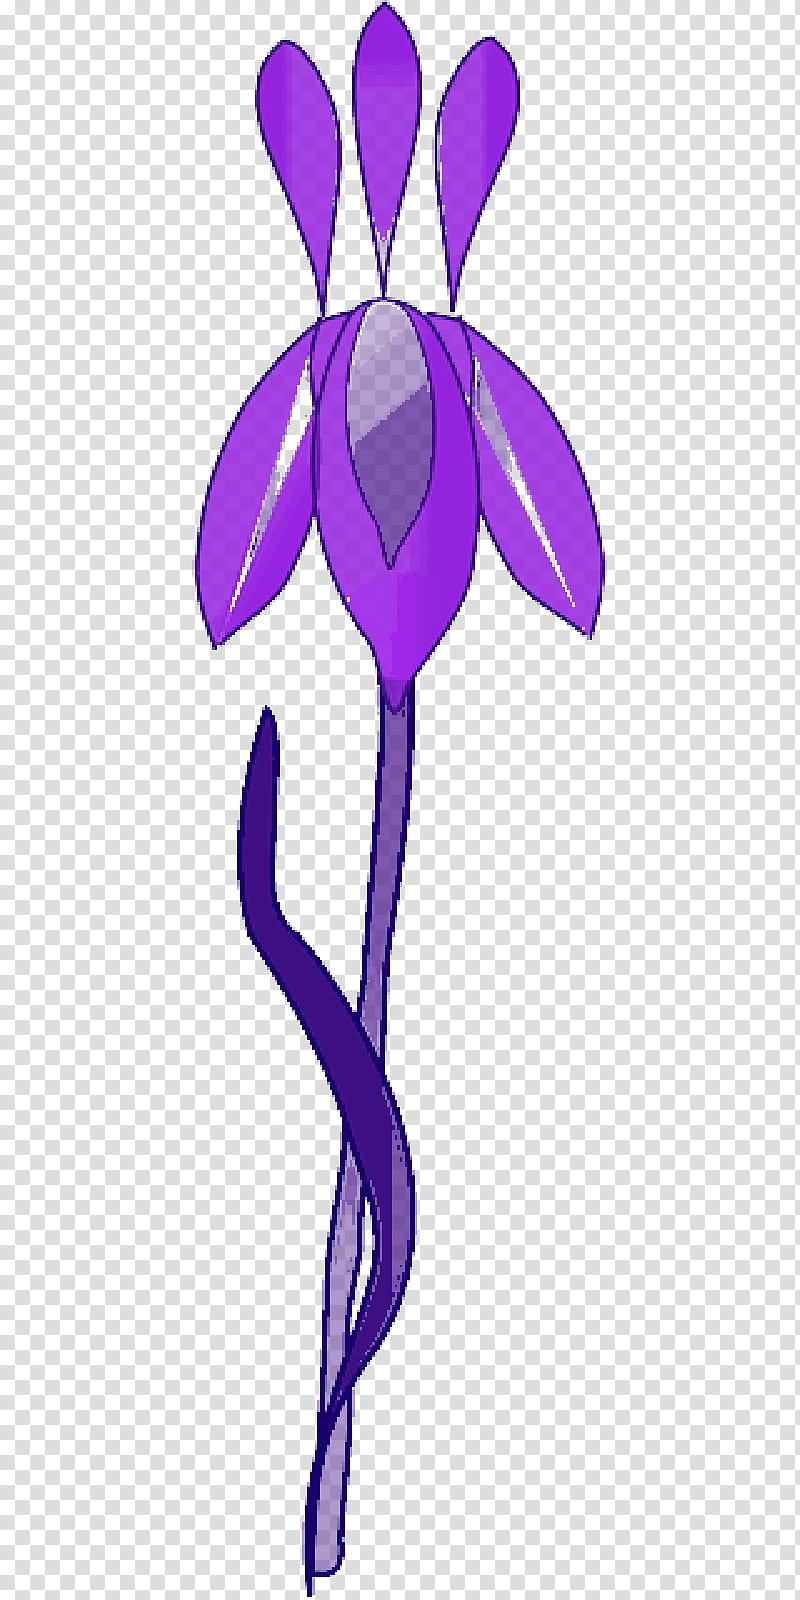 Blue Iris Flower, Northern Blue Flag, Iris Flower Data Set, Yellow Iris, Drawing, Plants, Curtiss Botanical Magazine, Irises transparent background PNG clipart